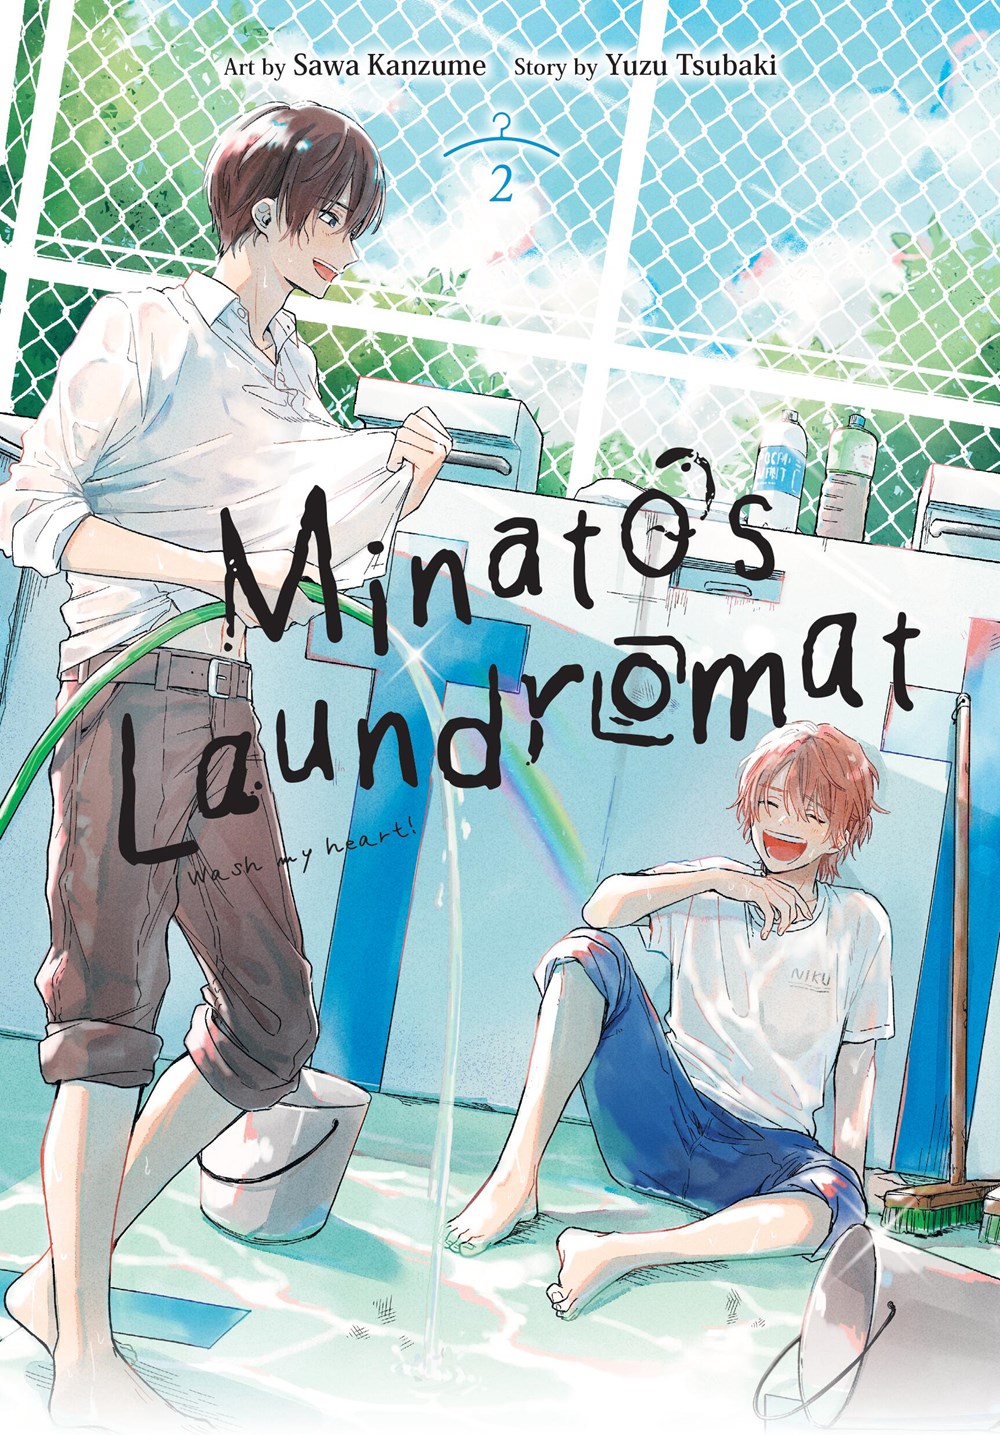 Minato's Laundromat Manga Volume 2 image count 0